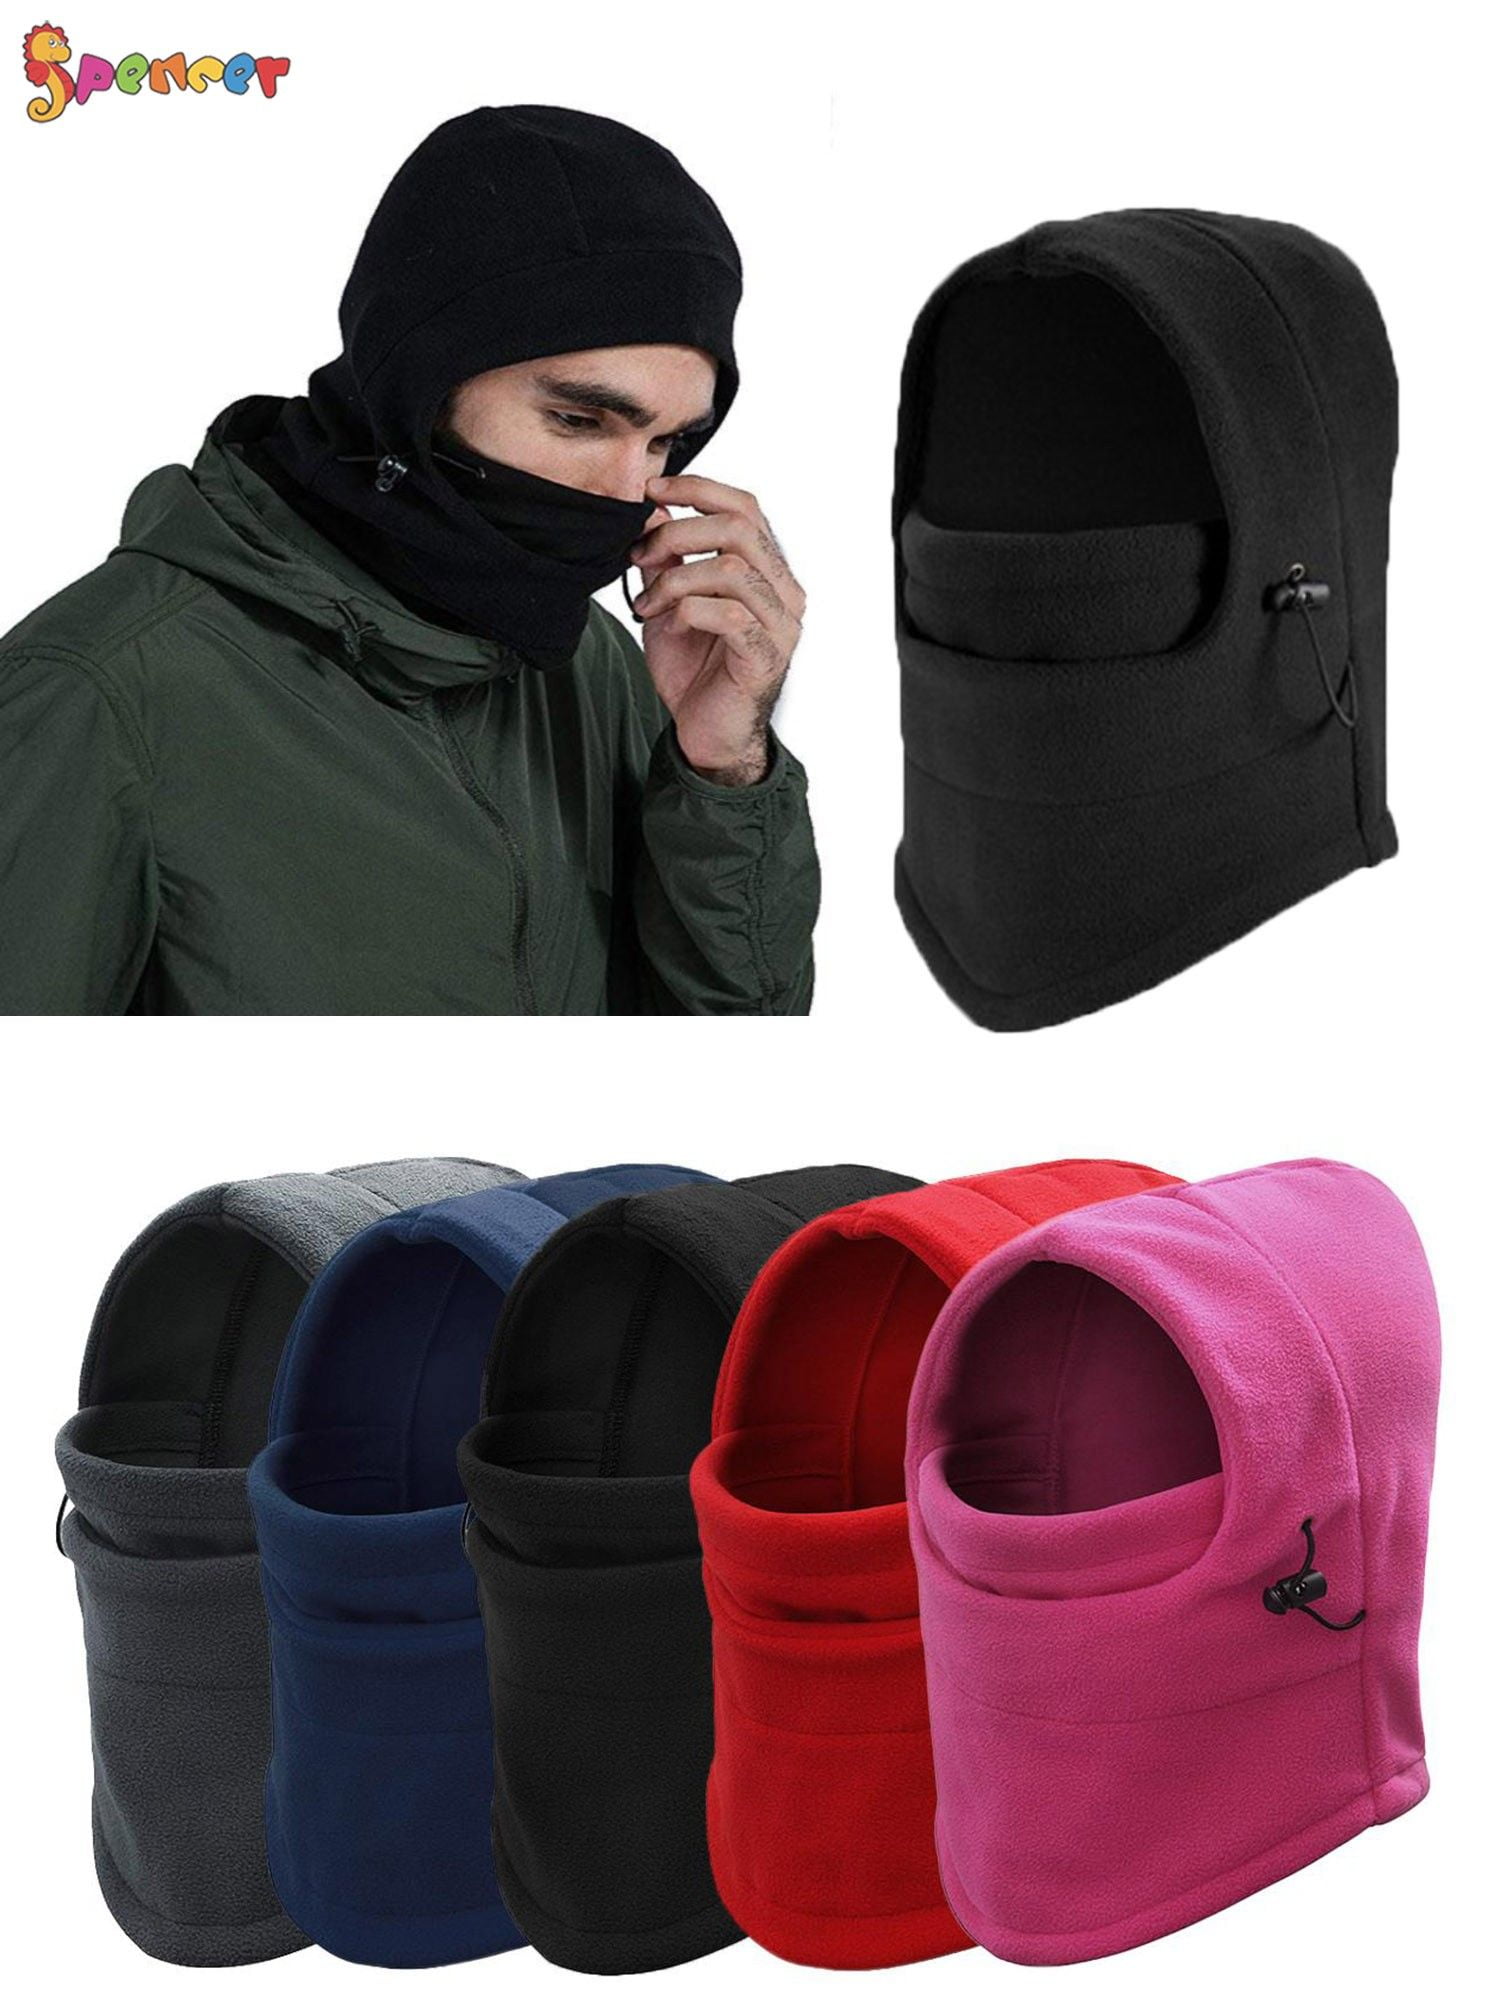 Thermal Fleece Balaclava Hat Hooded Neck Warmer Winter Sports Snowboard Face Mask for Men Bike Helmet Beanies Masked Cap